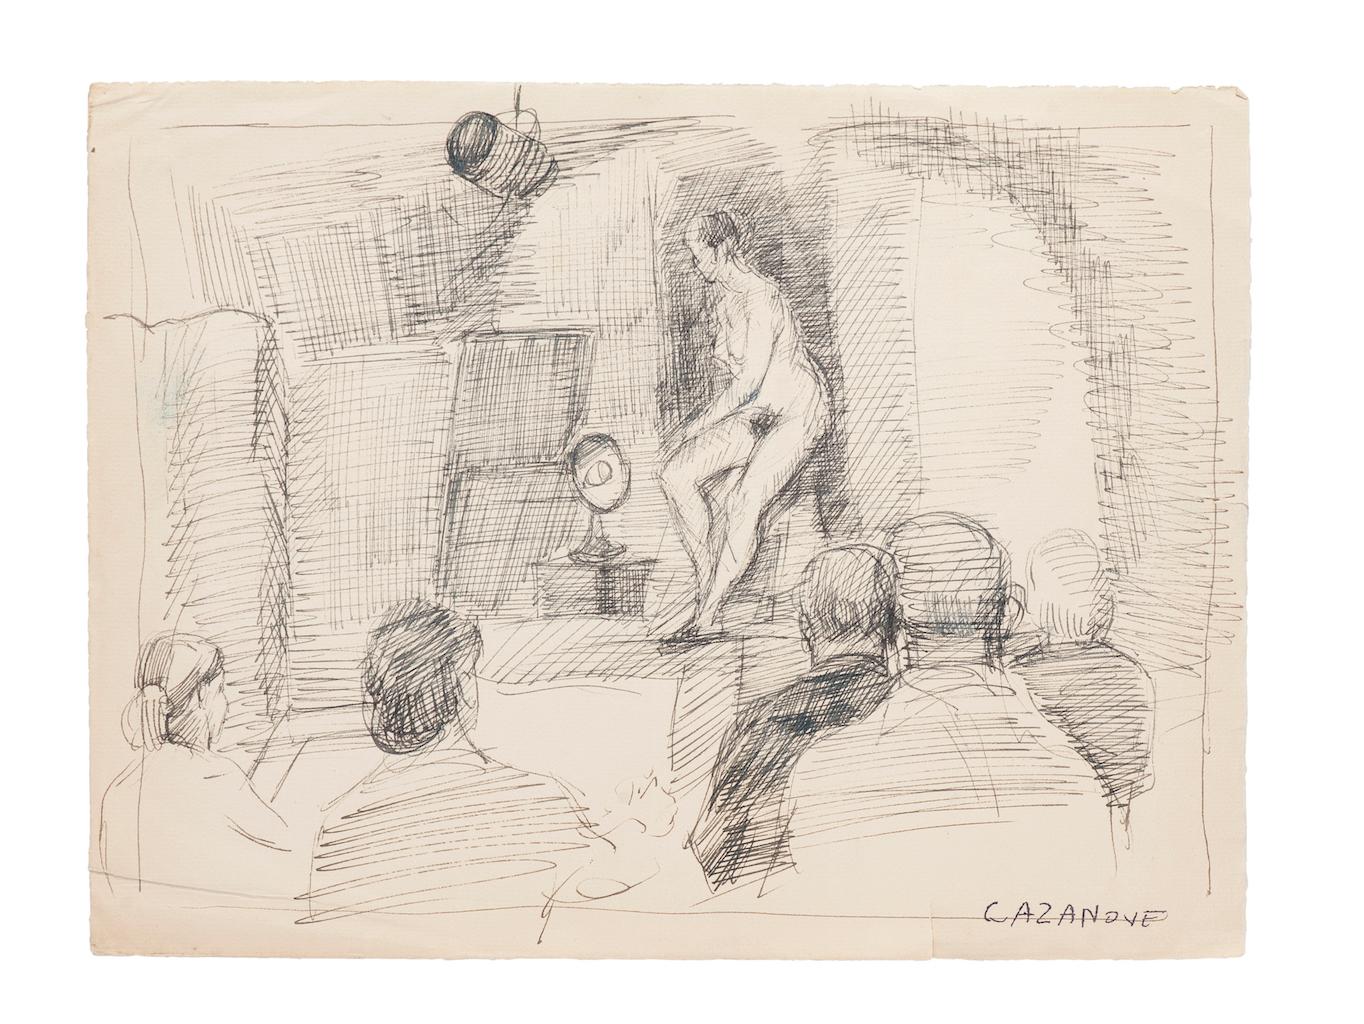 Raymond Cazanove Figurative Art - Nude - Original Pen on Paper by R. Cazanove - 20th Century